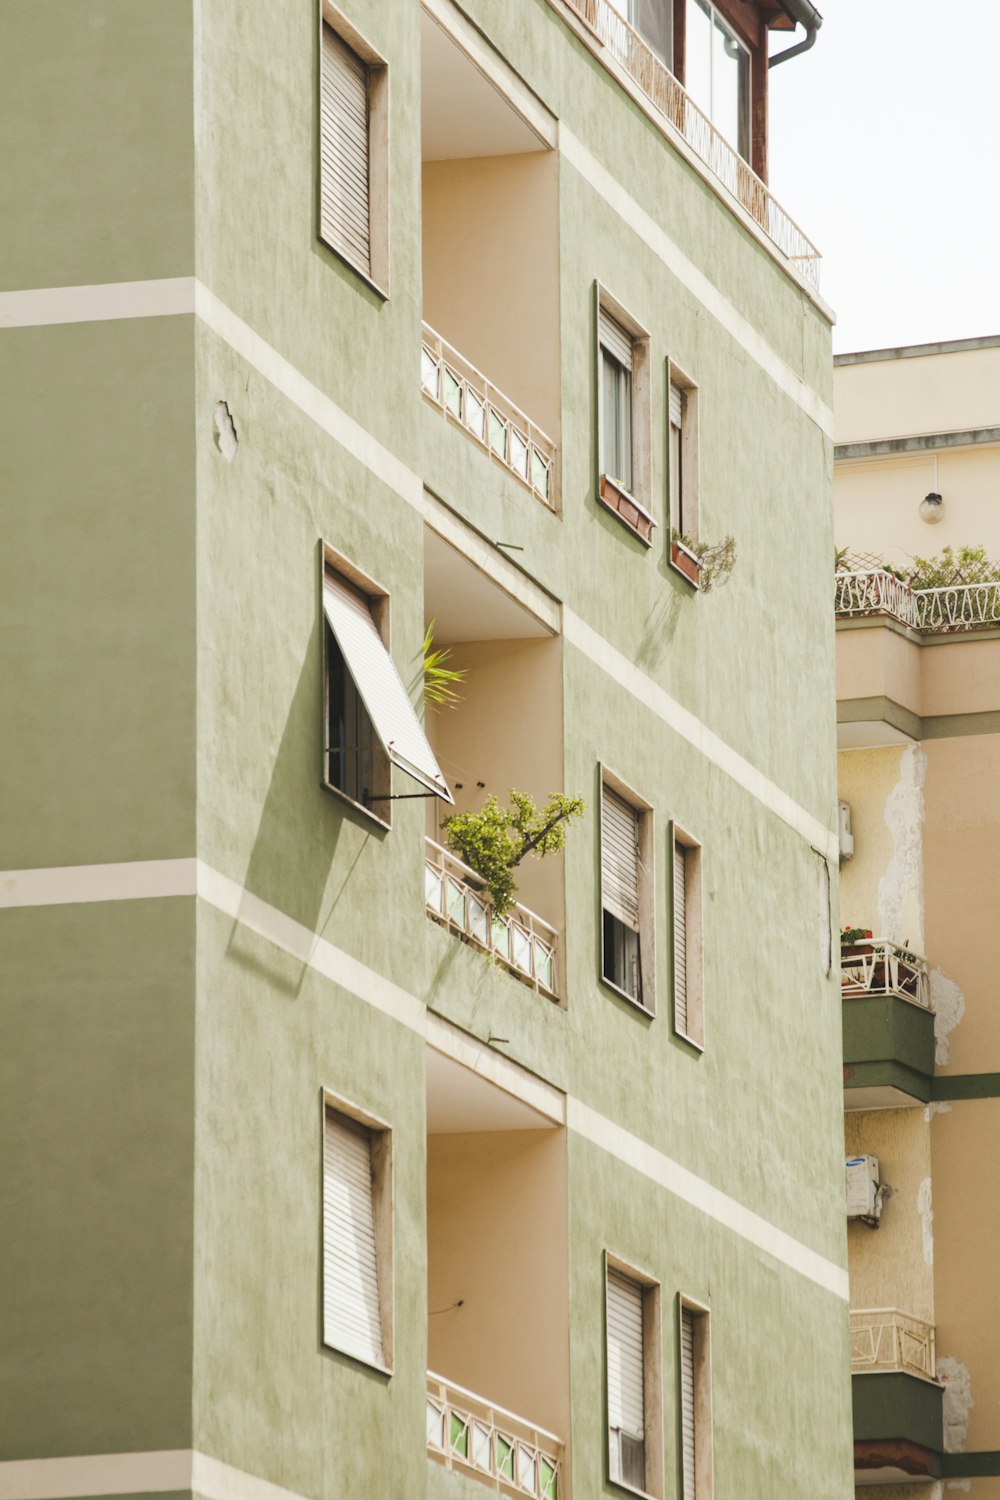 beige concrete building with green plants